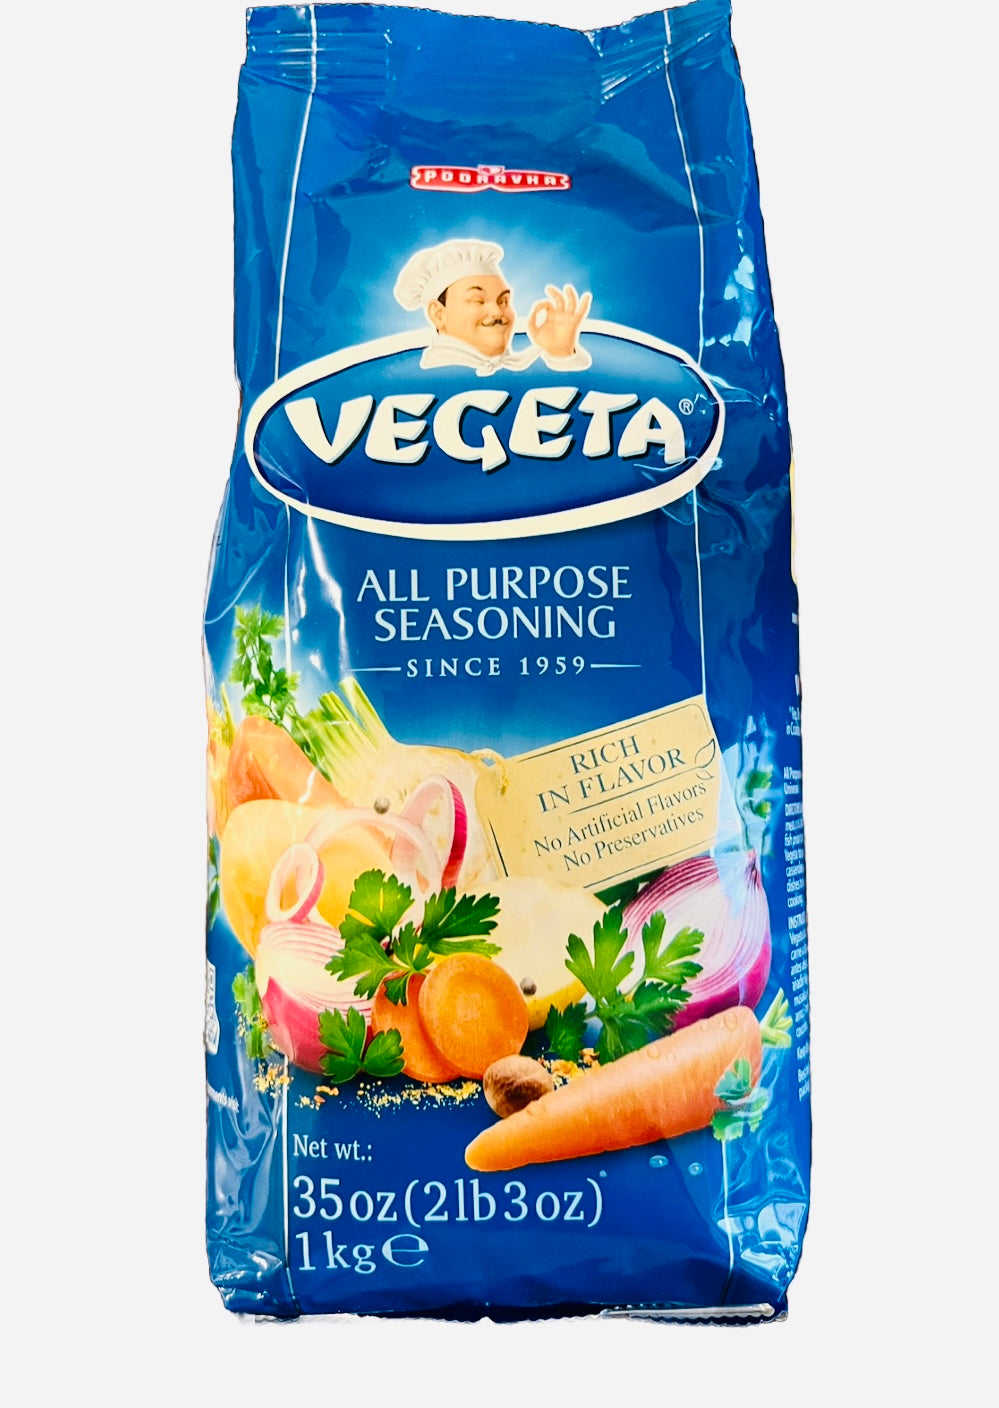 Vegeta-All Purpose Seasoning Bag + Can (Made by Podravka)